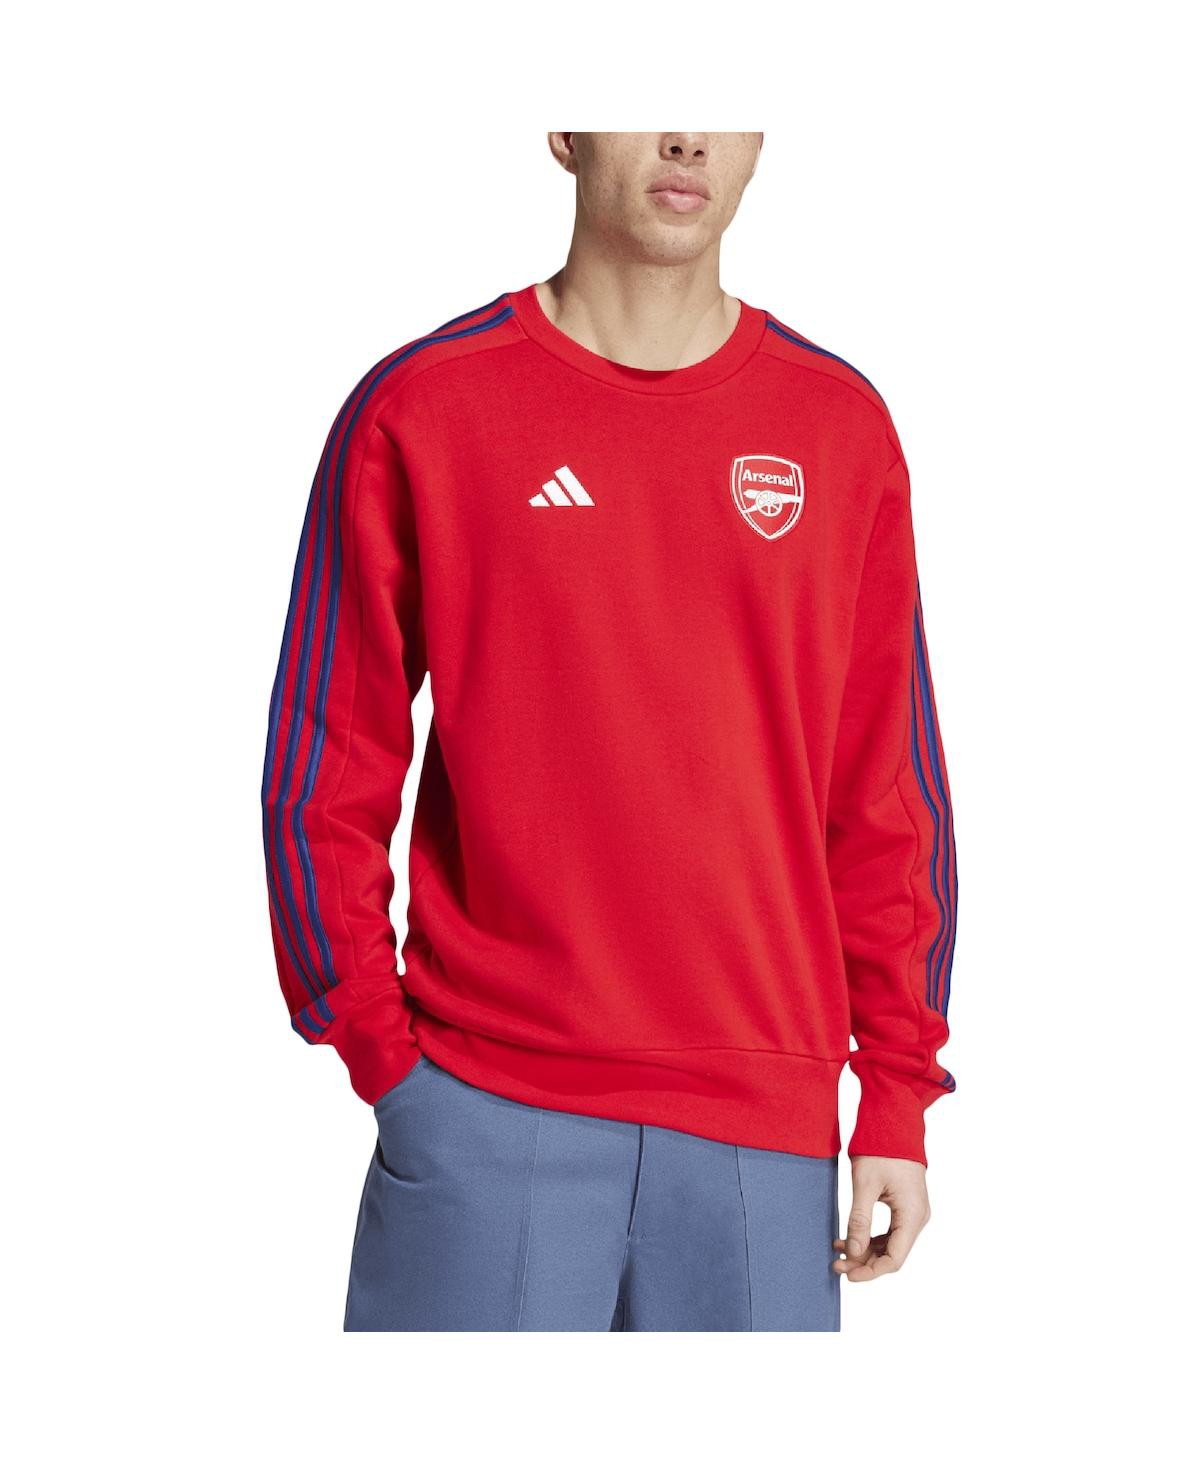 Adidas Originals Men's Red Arsenal Dna Pullover Sweatshirt